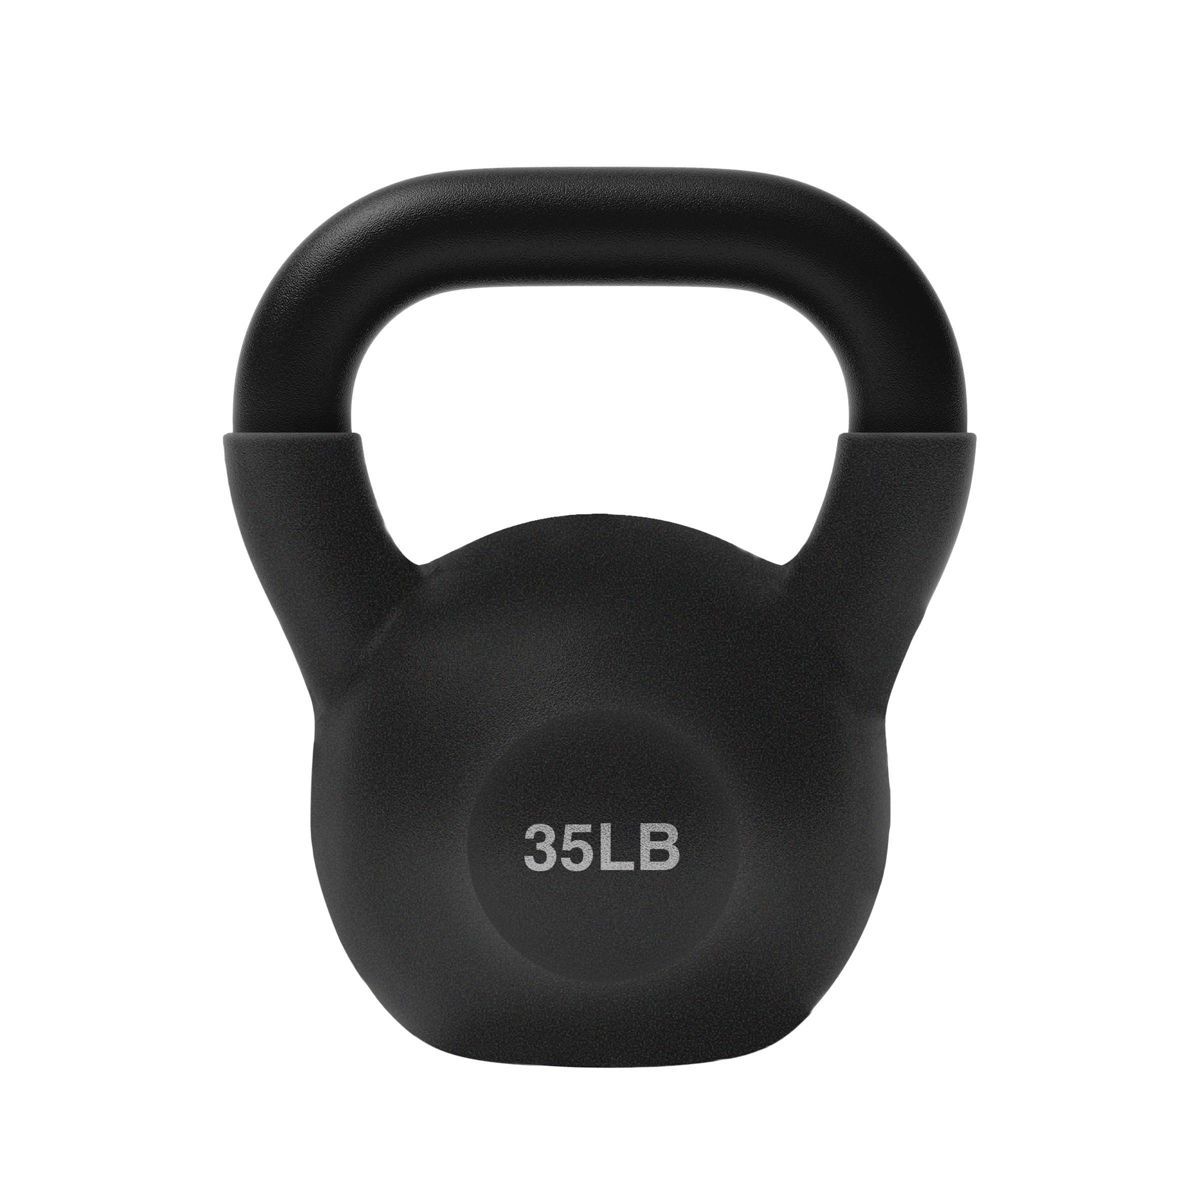 WECARE Fitness Kettlebell 35lbs - Black | Target